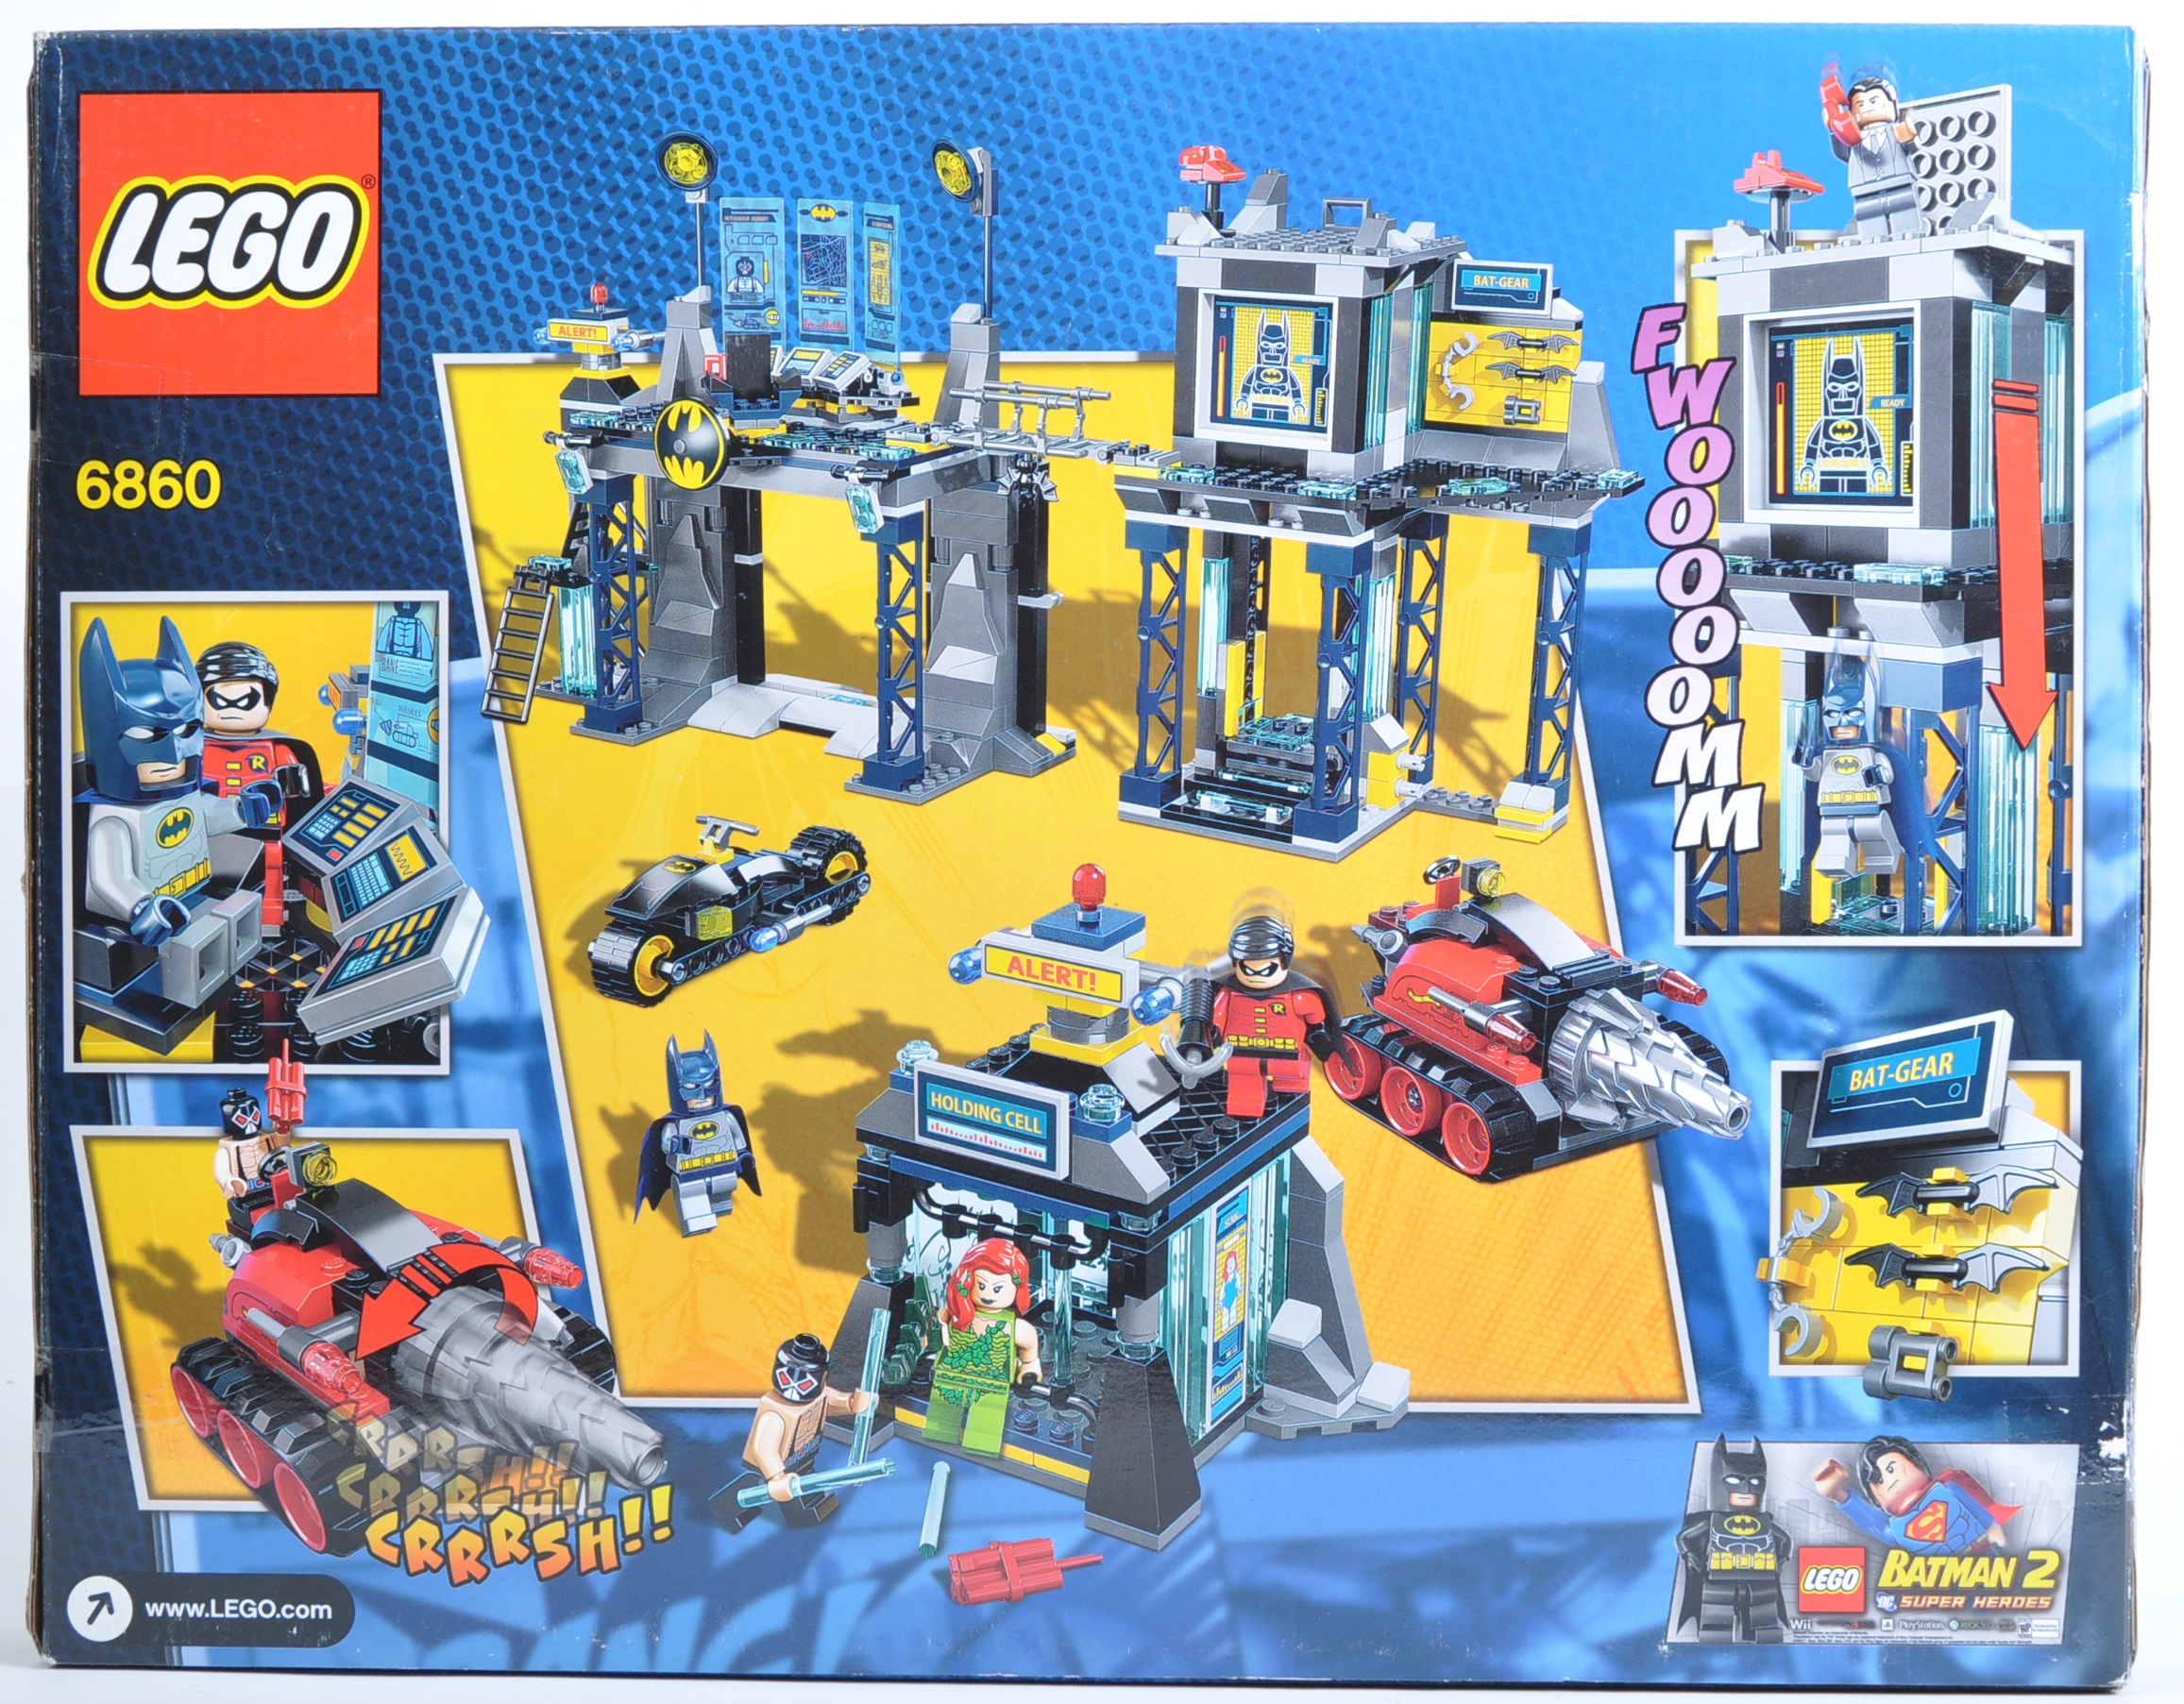 LEGO SET - DC UNIVERSE SUPER HEROES - 6860 - THE BATCAVE - Image 2 of 4